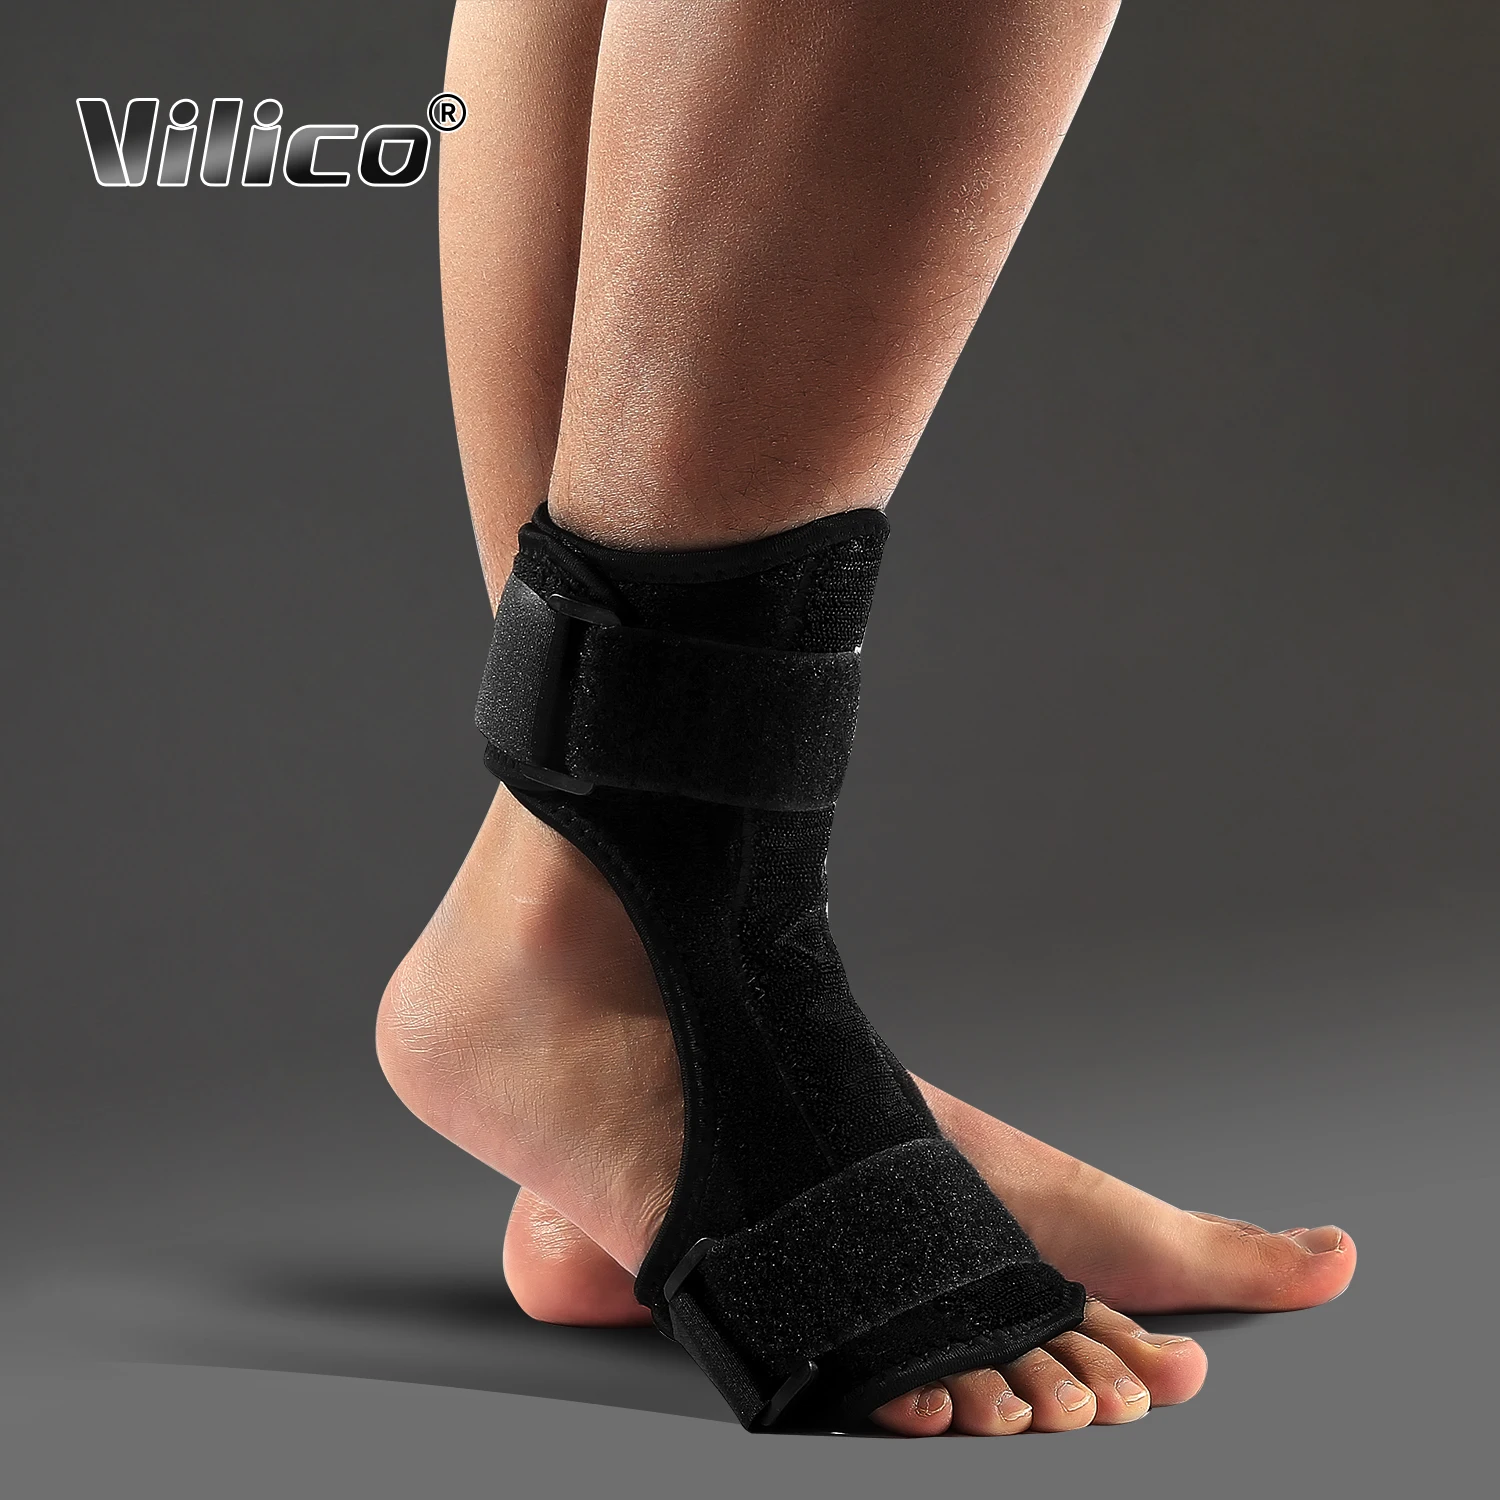 1pc Adjustable Ankle Support Foot Splint Drop Orthotic Brace Elastic Dorsal Splint Foot Care Tool Ligament Belt Ankle Brace